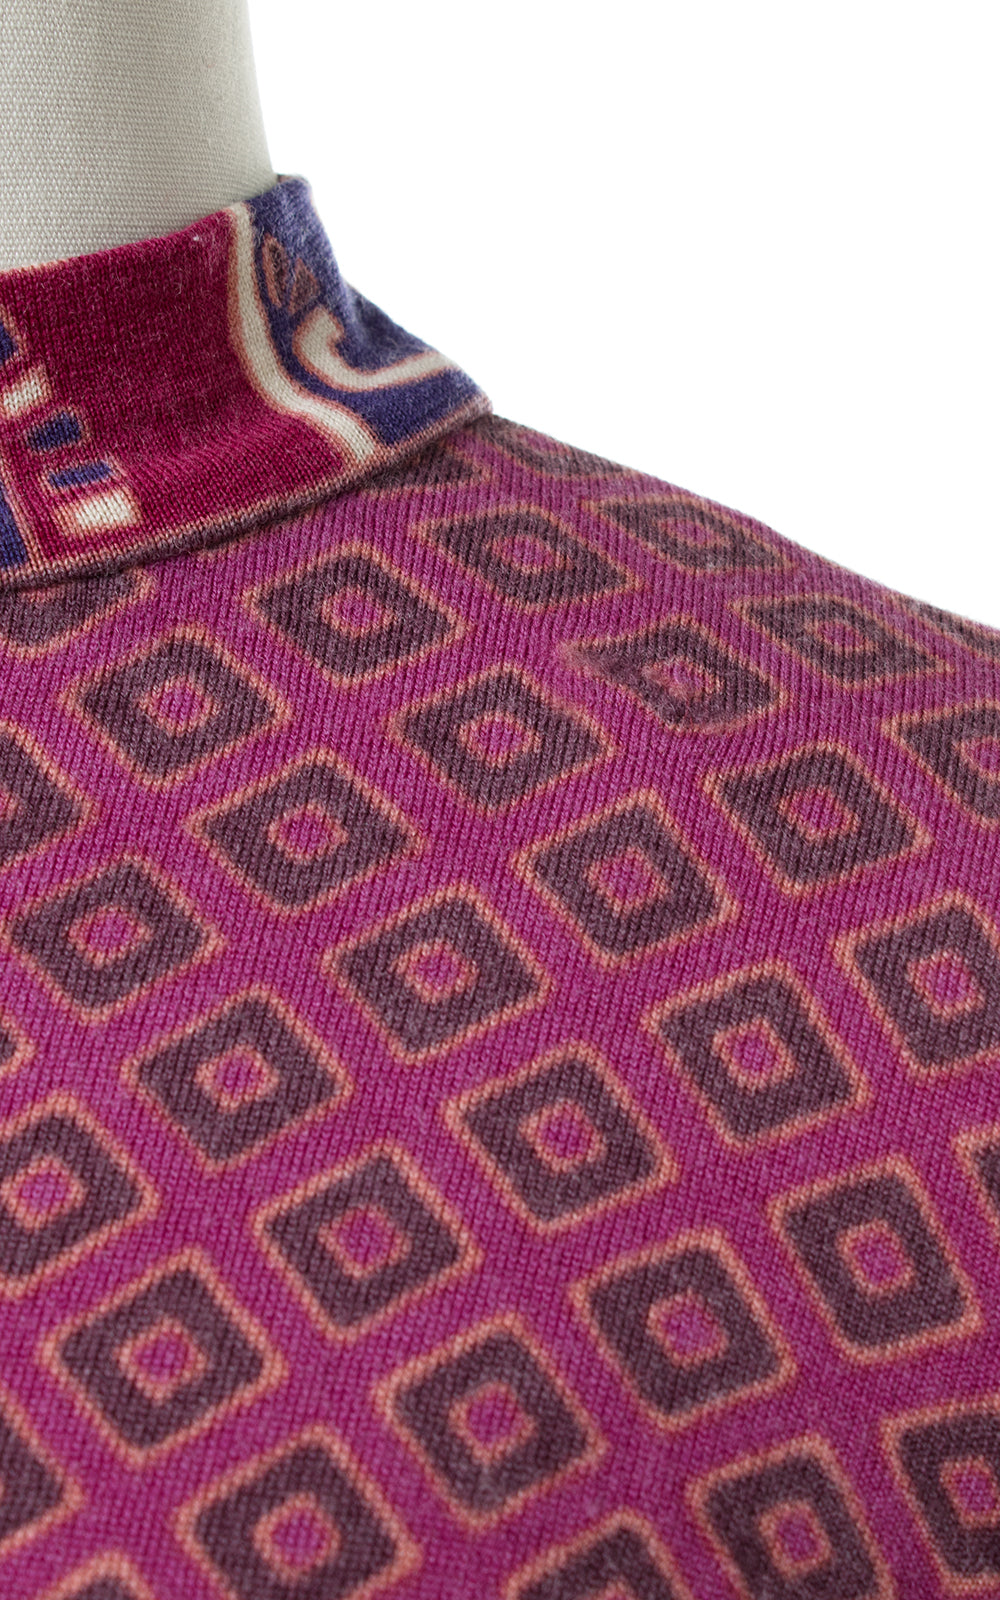 1960s Goldworm Geometric Knit Wool Dress